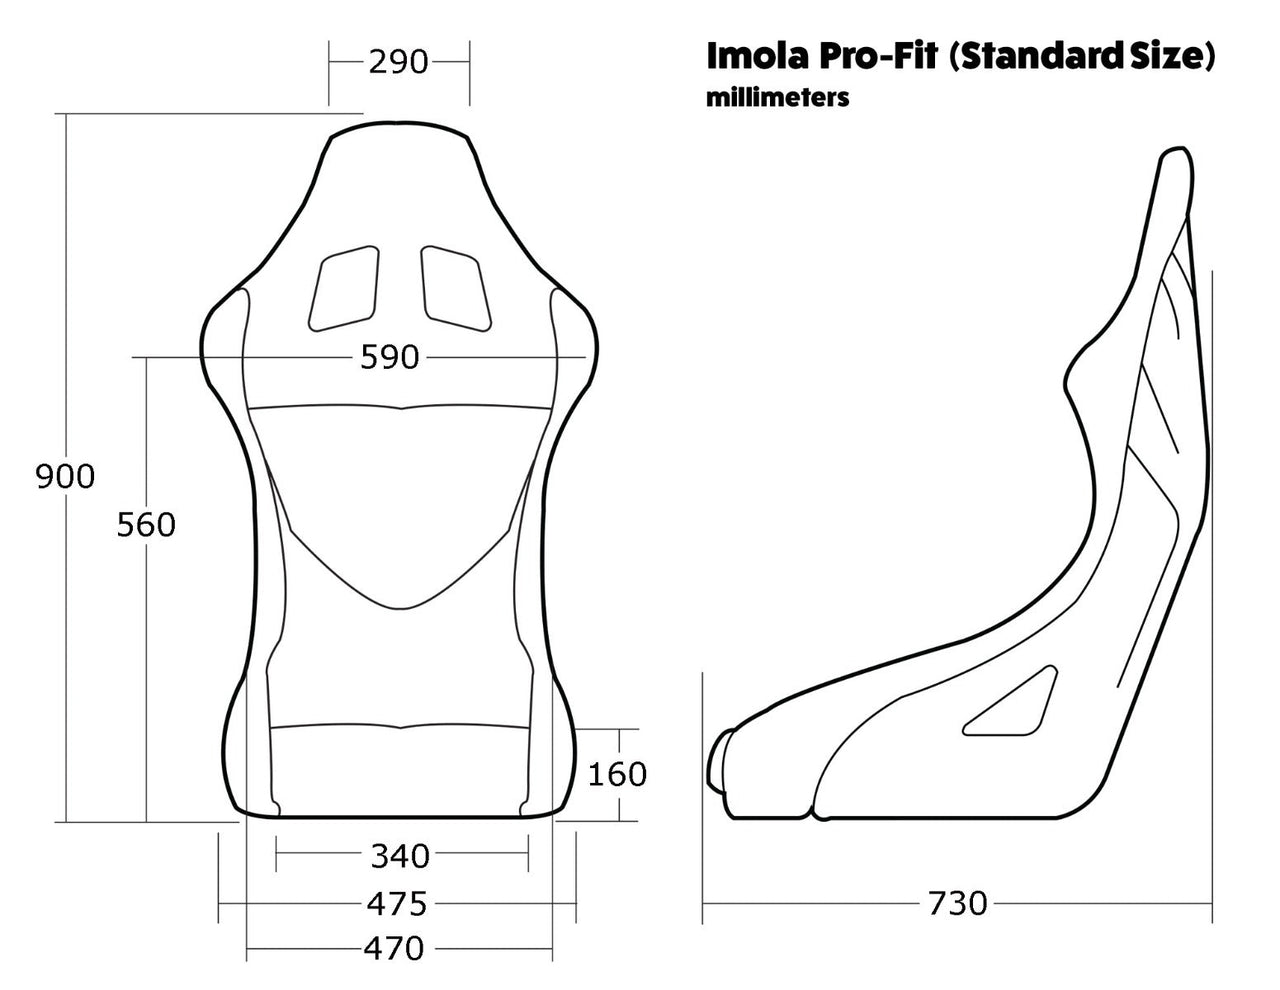 Cobra Imola Pro Fit Seat Dimensions Best Deal